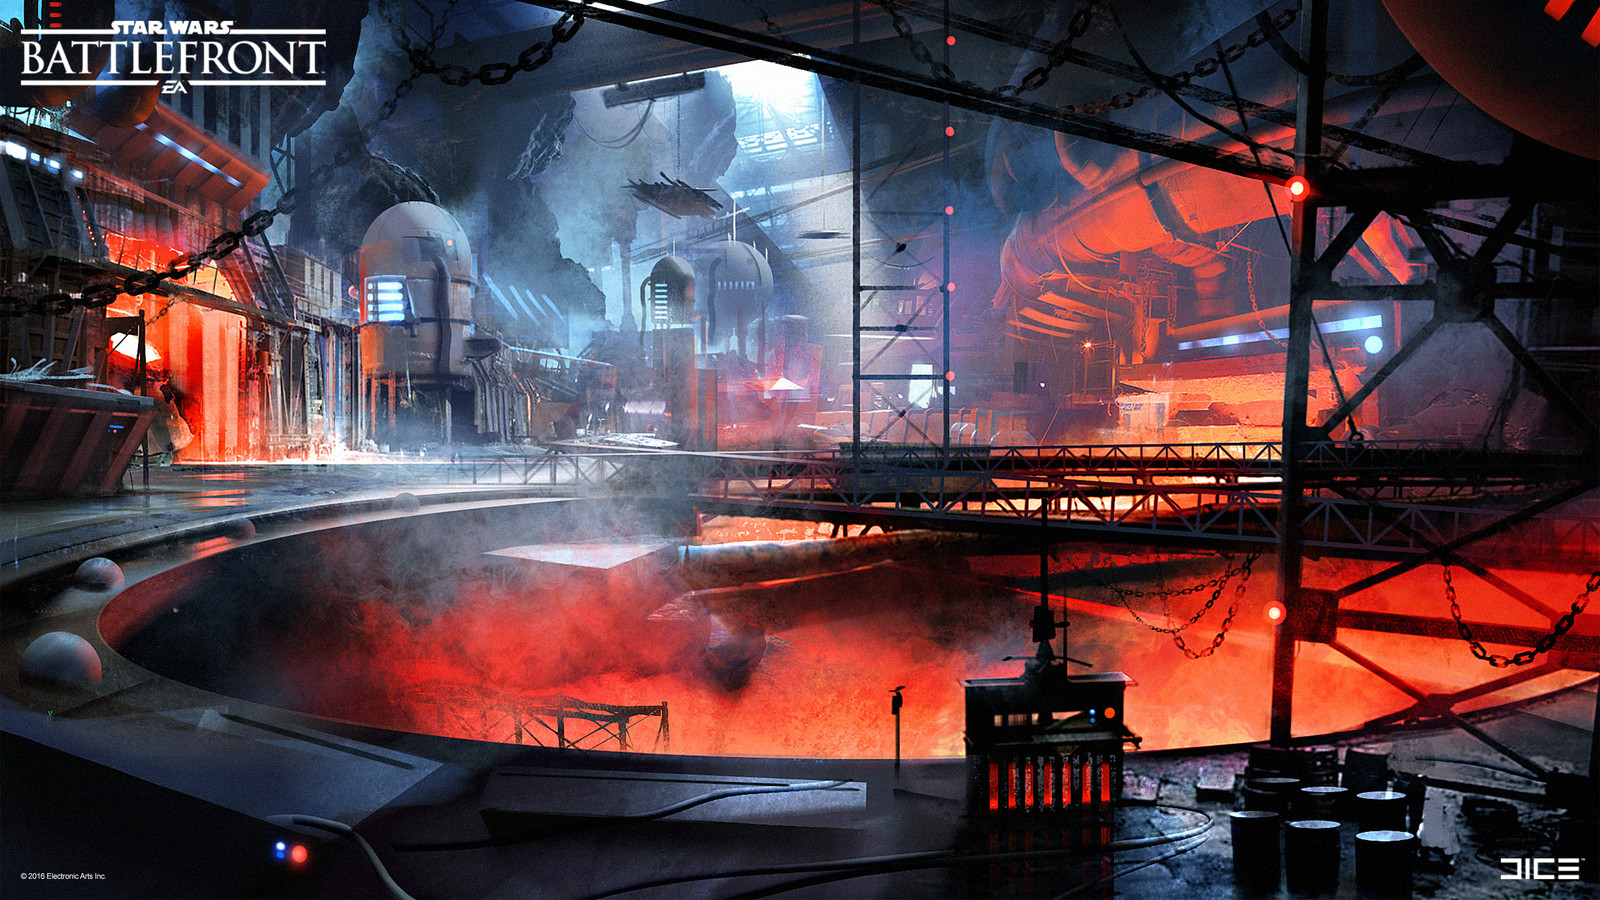 SoroSuub Factory Concept Art  for the Star Wars Battlefront Outer Rim DLC. (2015)